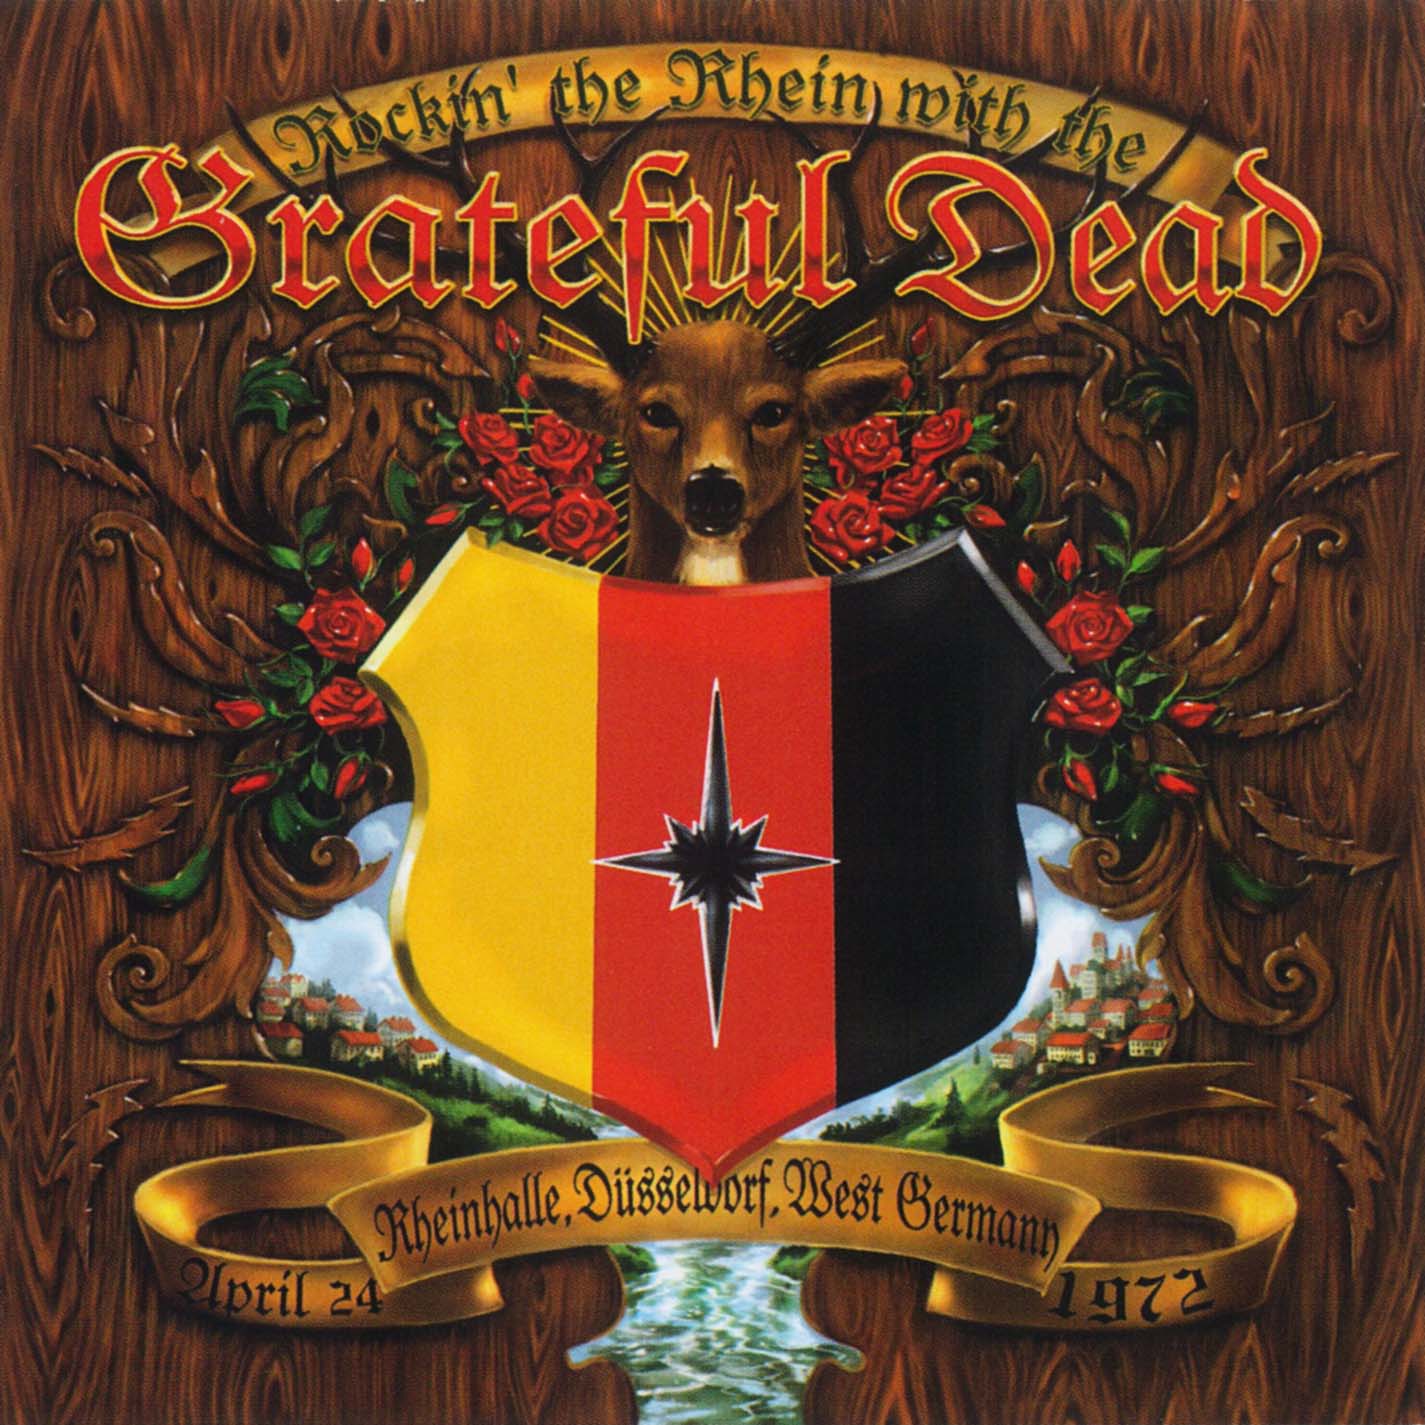 Grateful Dead Rockin' the Rhein album cover artwork